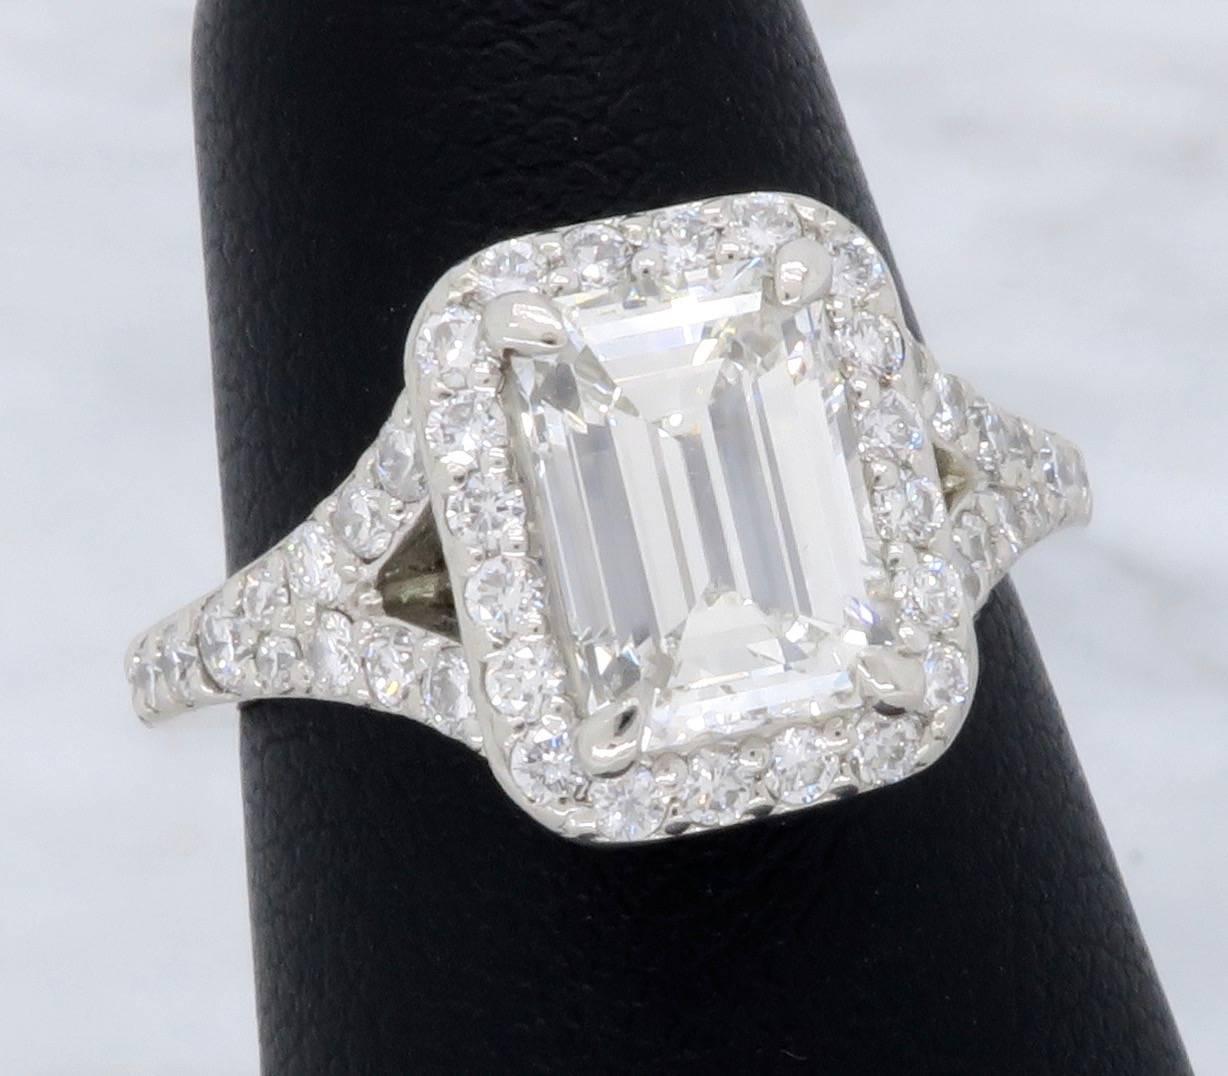 1.5 carat emerald cut solitaire diamond ring